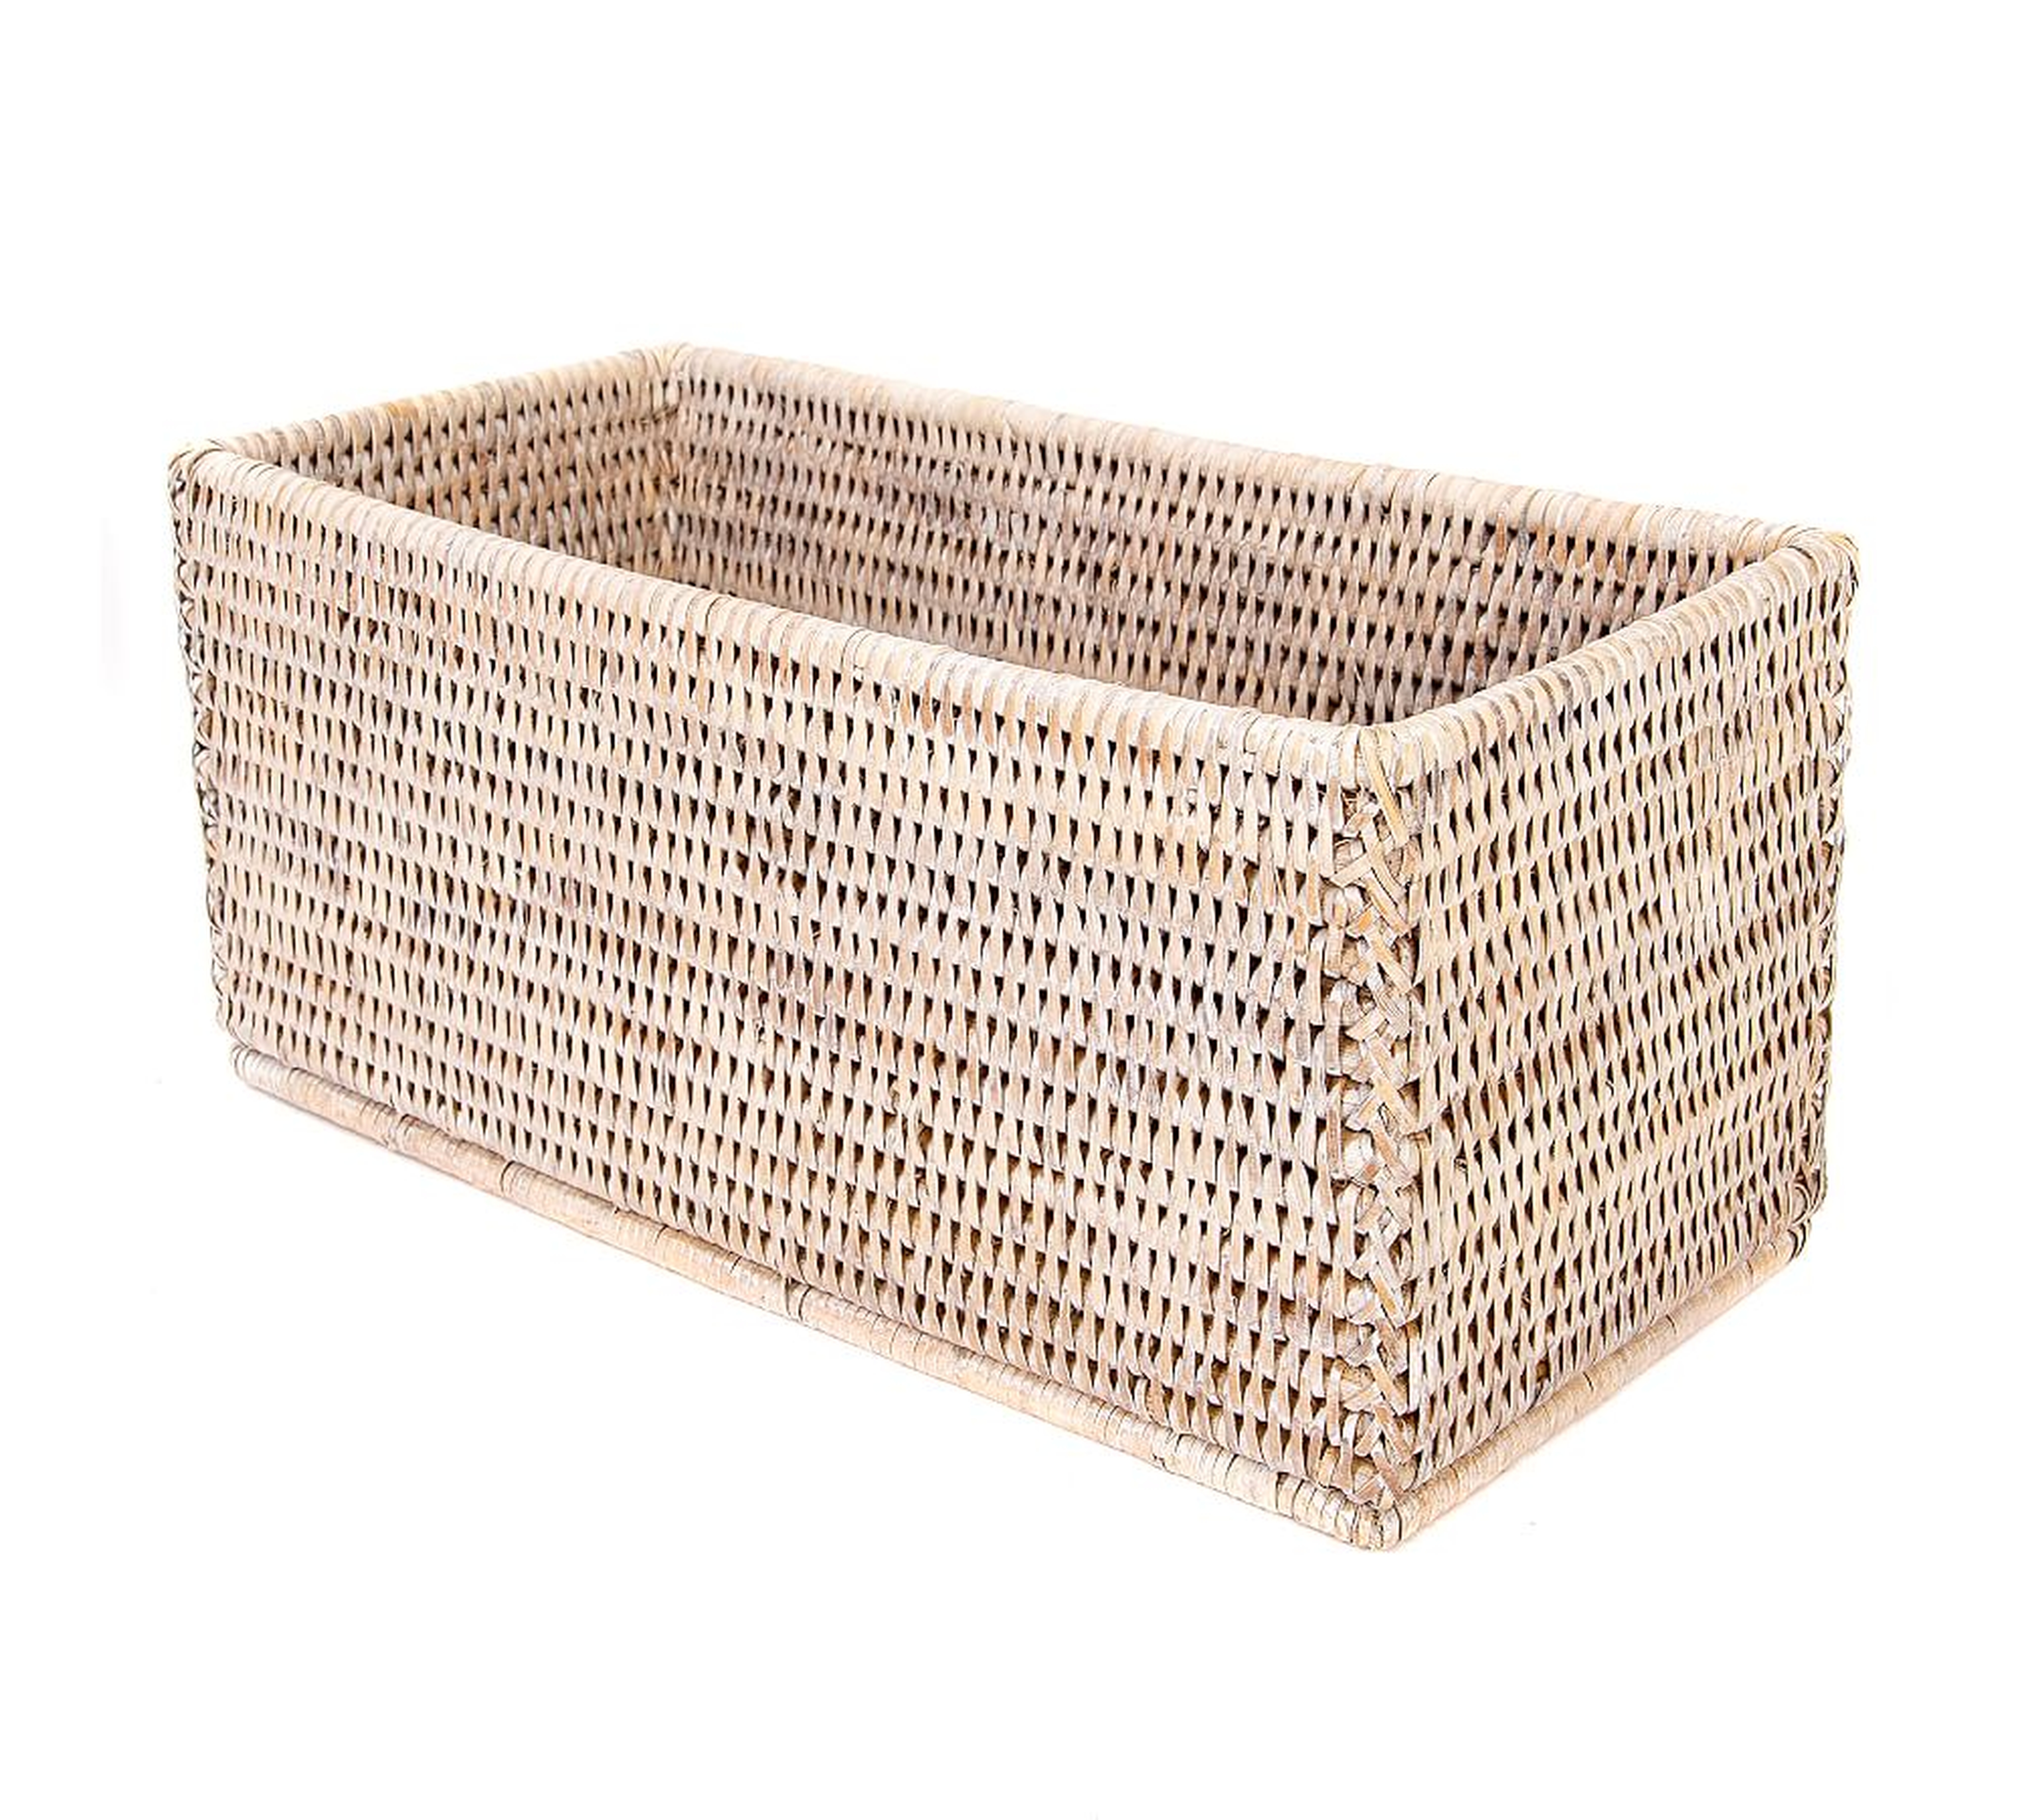 Tava Handwoven Rattan Rectangular Everything Basket, White Wash - Pottery Barn